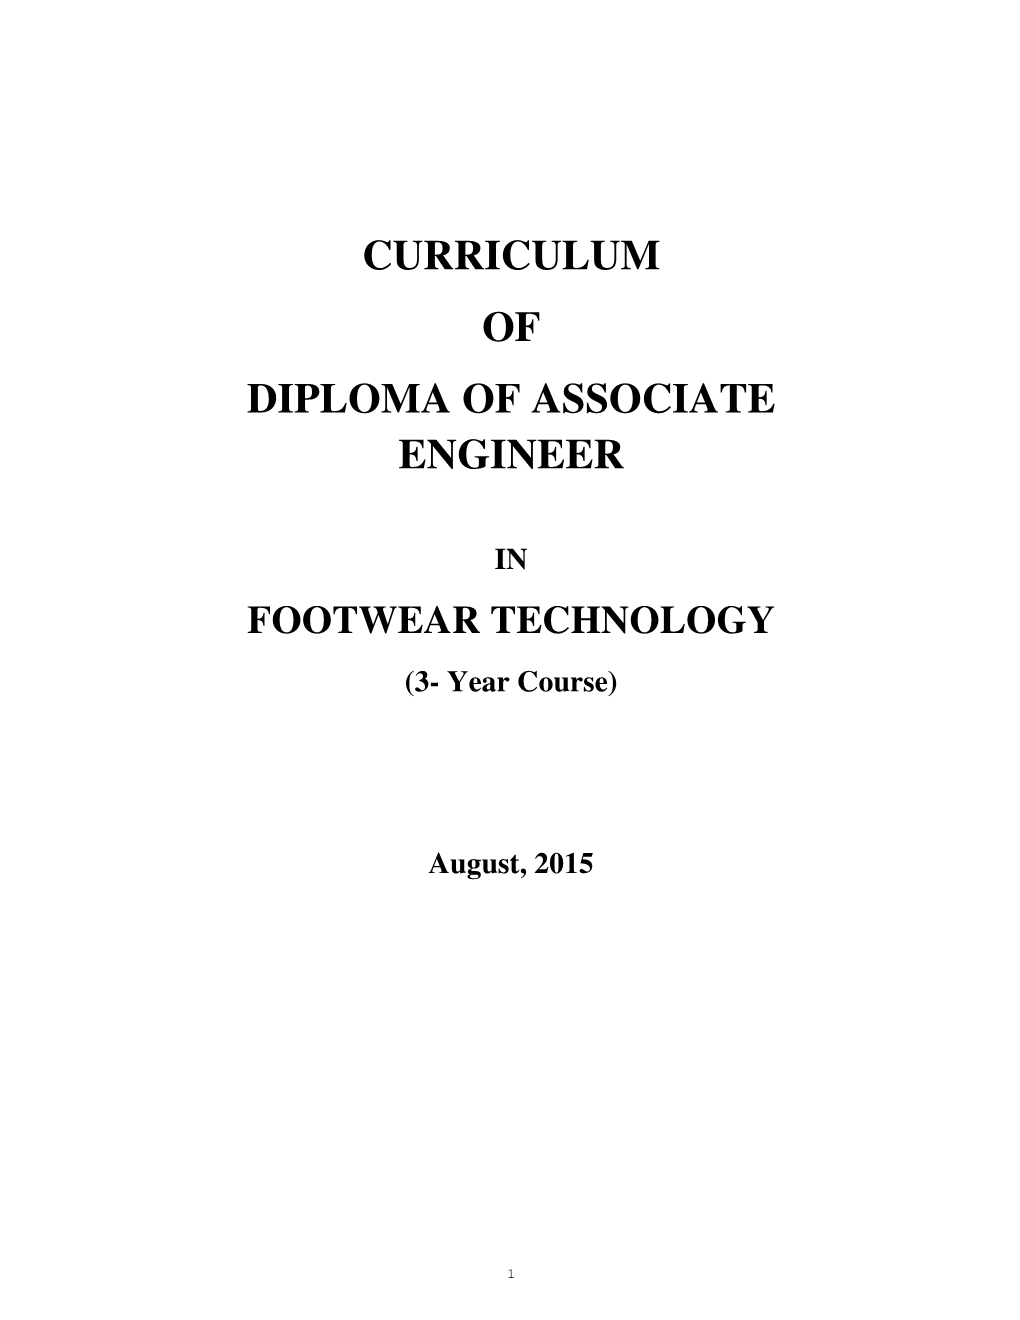 FOOTWEAR TECHNOLOGY (3- Year Course)